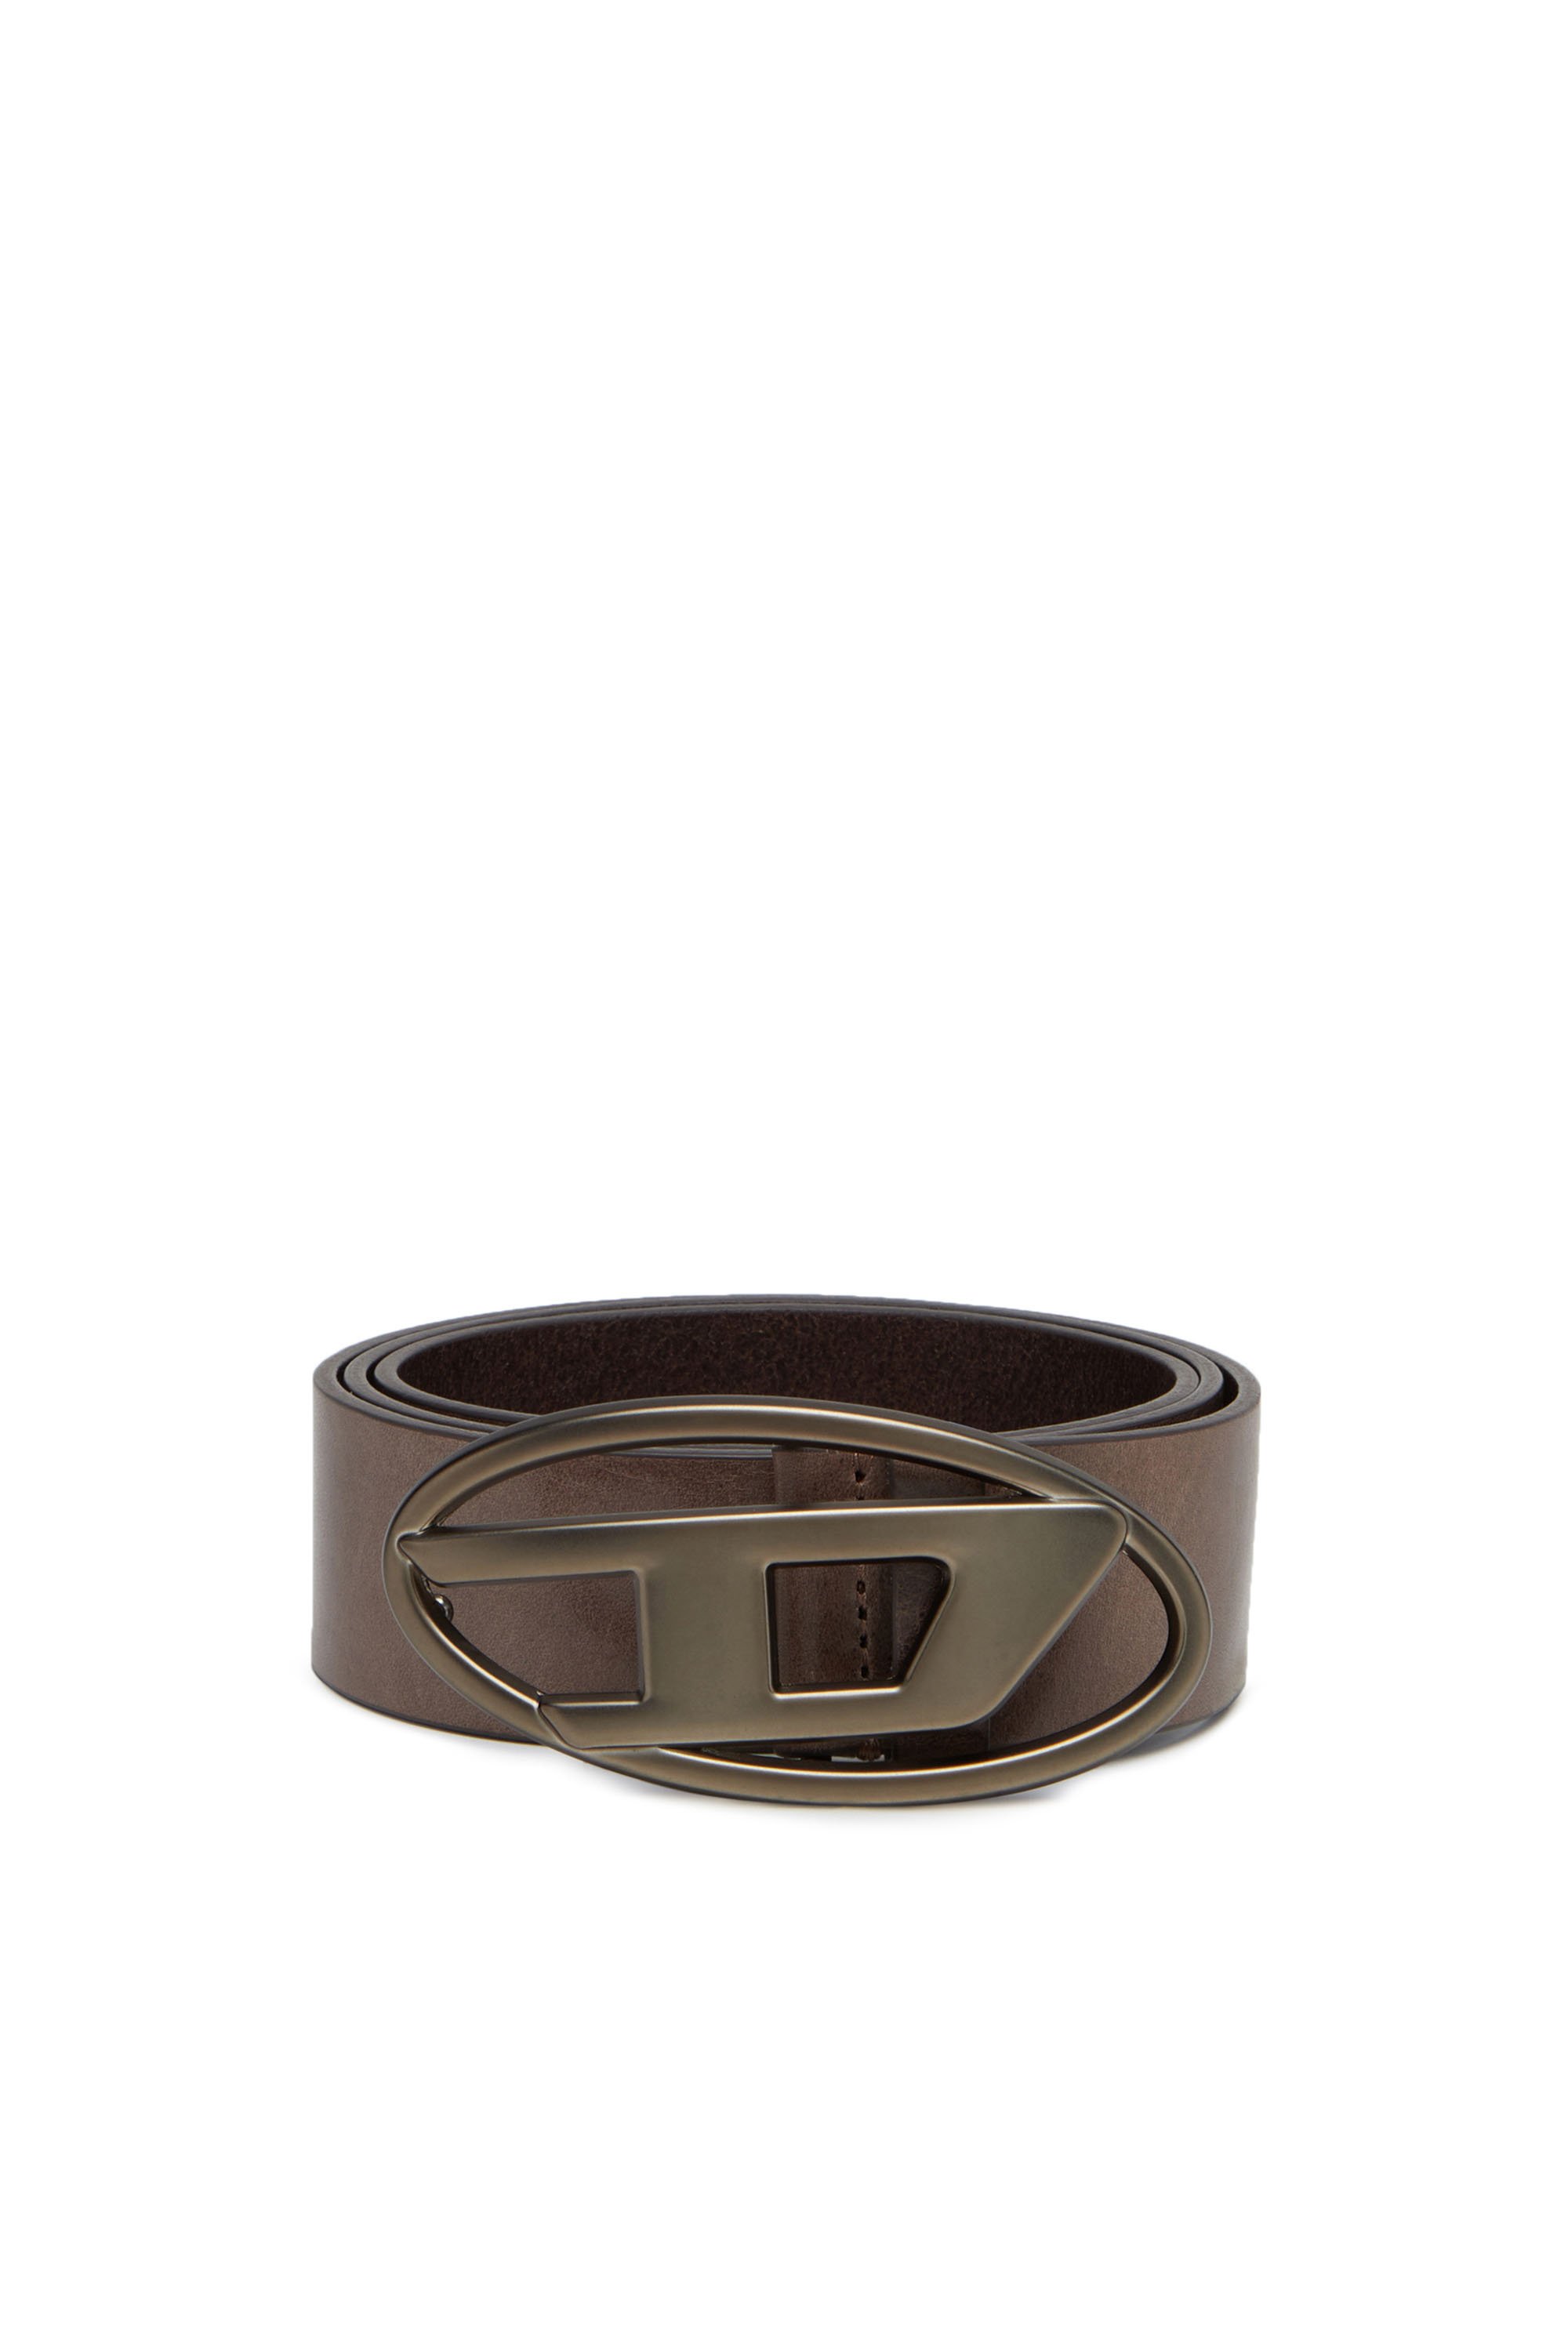 Diesel - Leather belt with tonal buckle - Belts - Unisex - Brown